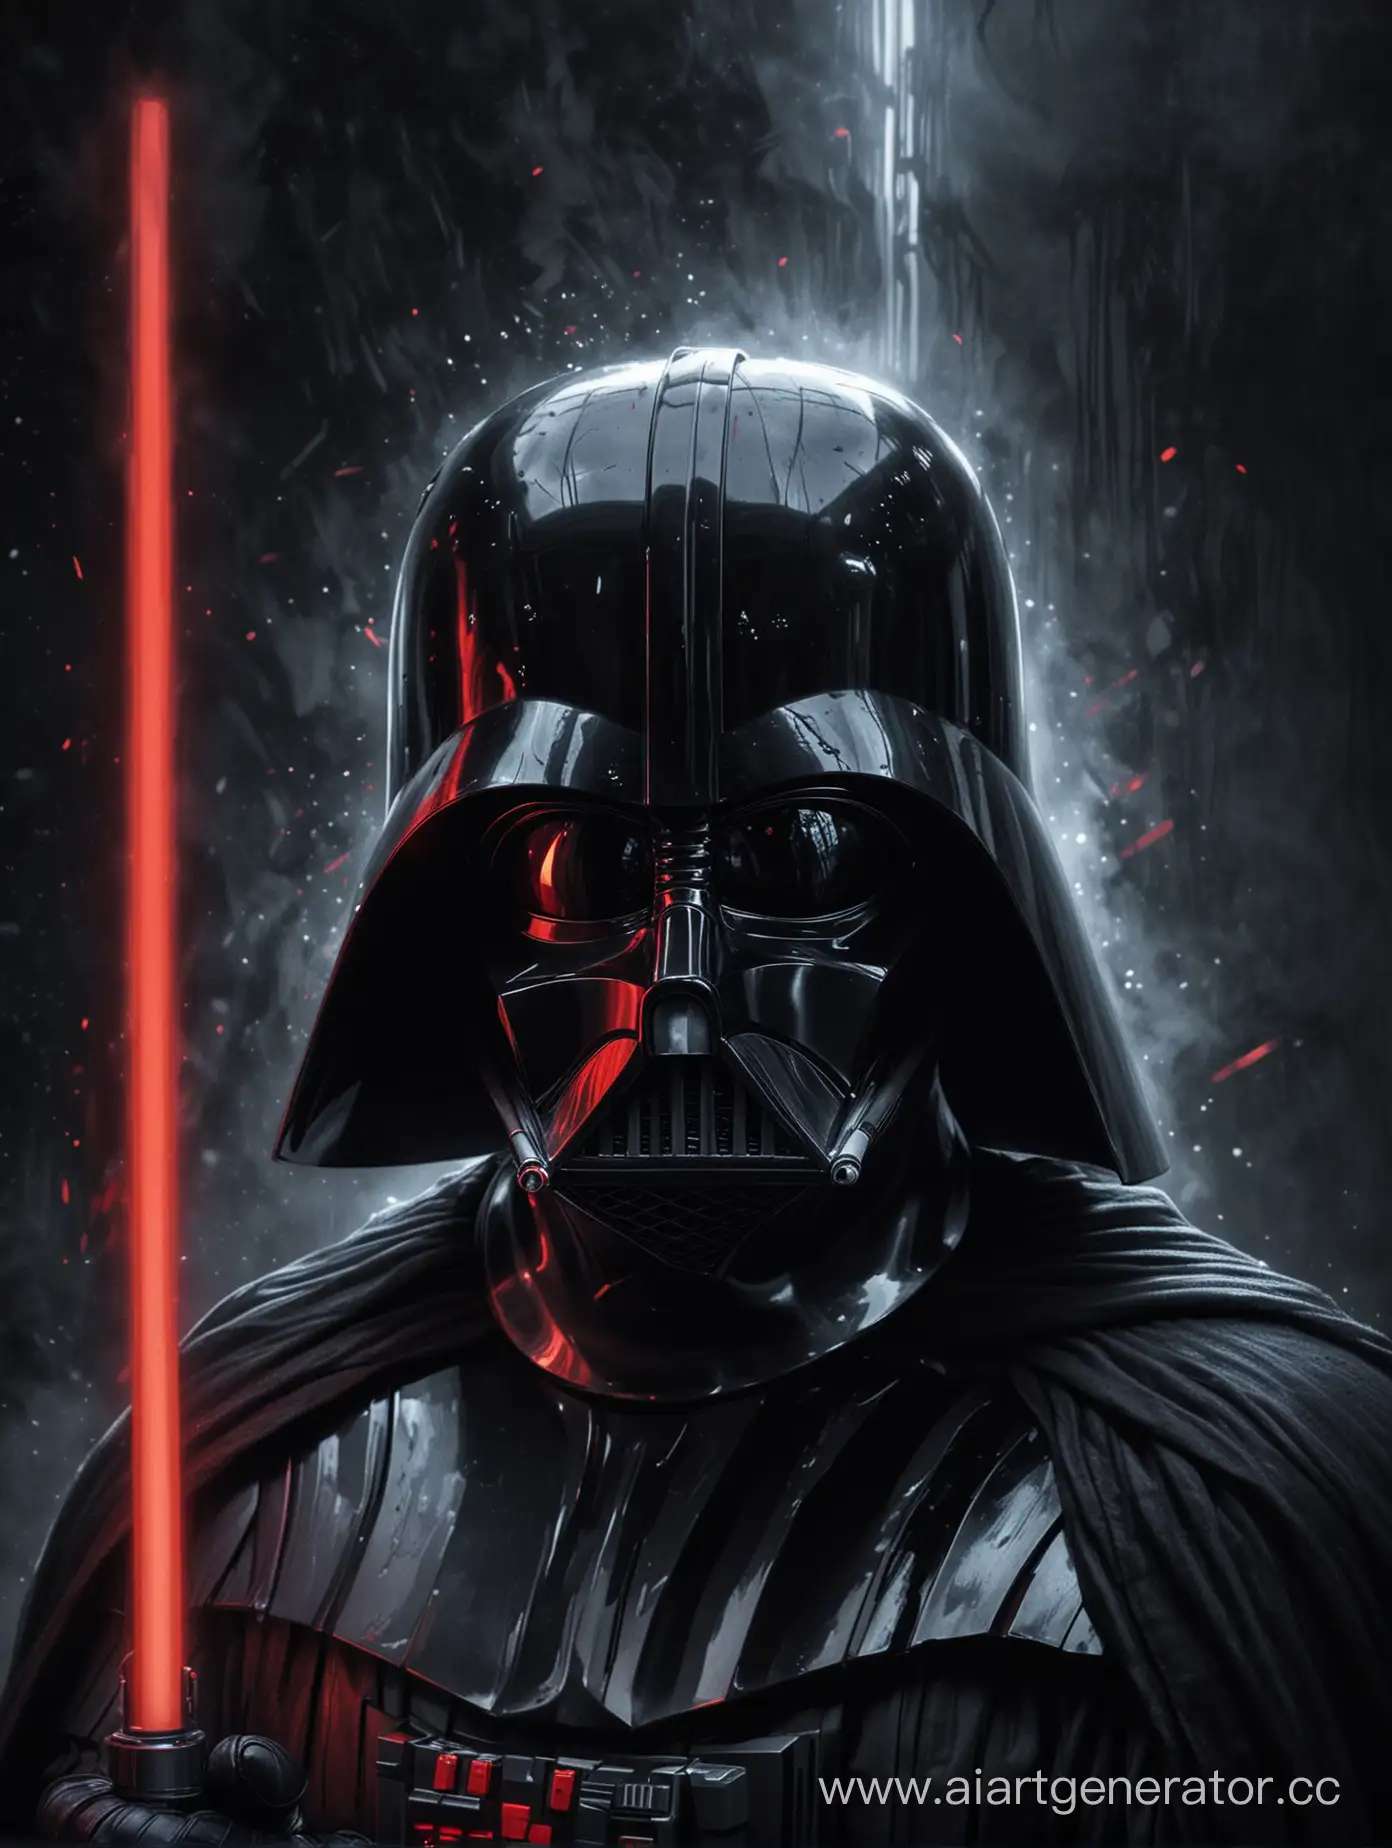 Darth-Vader-CloseUp-Expressive-Portrait-with-Red-Lightsaber